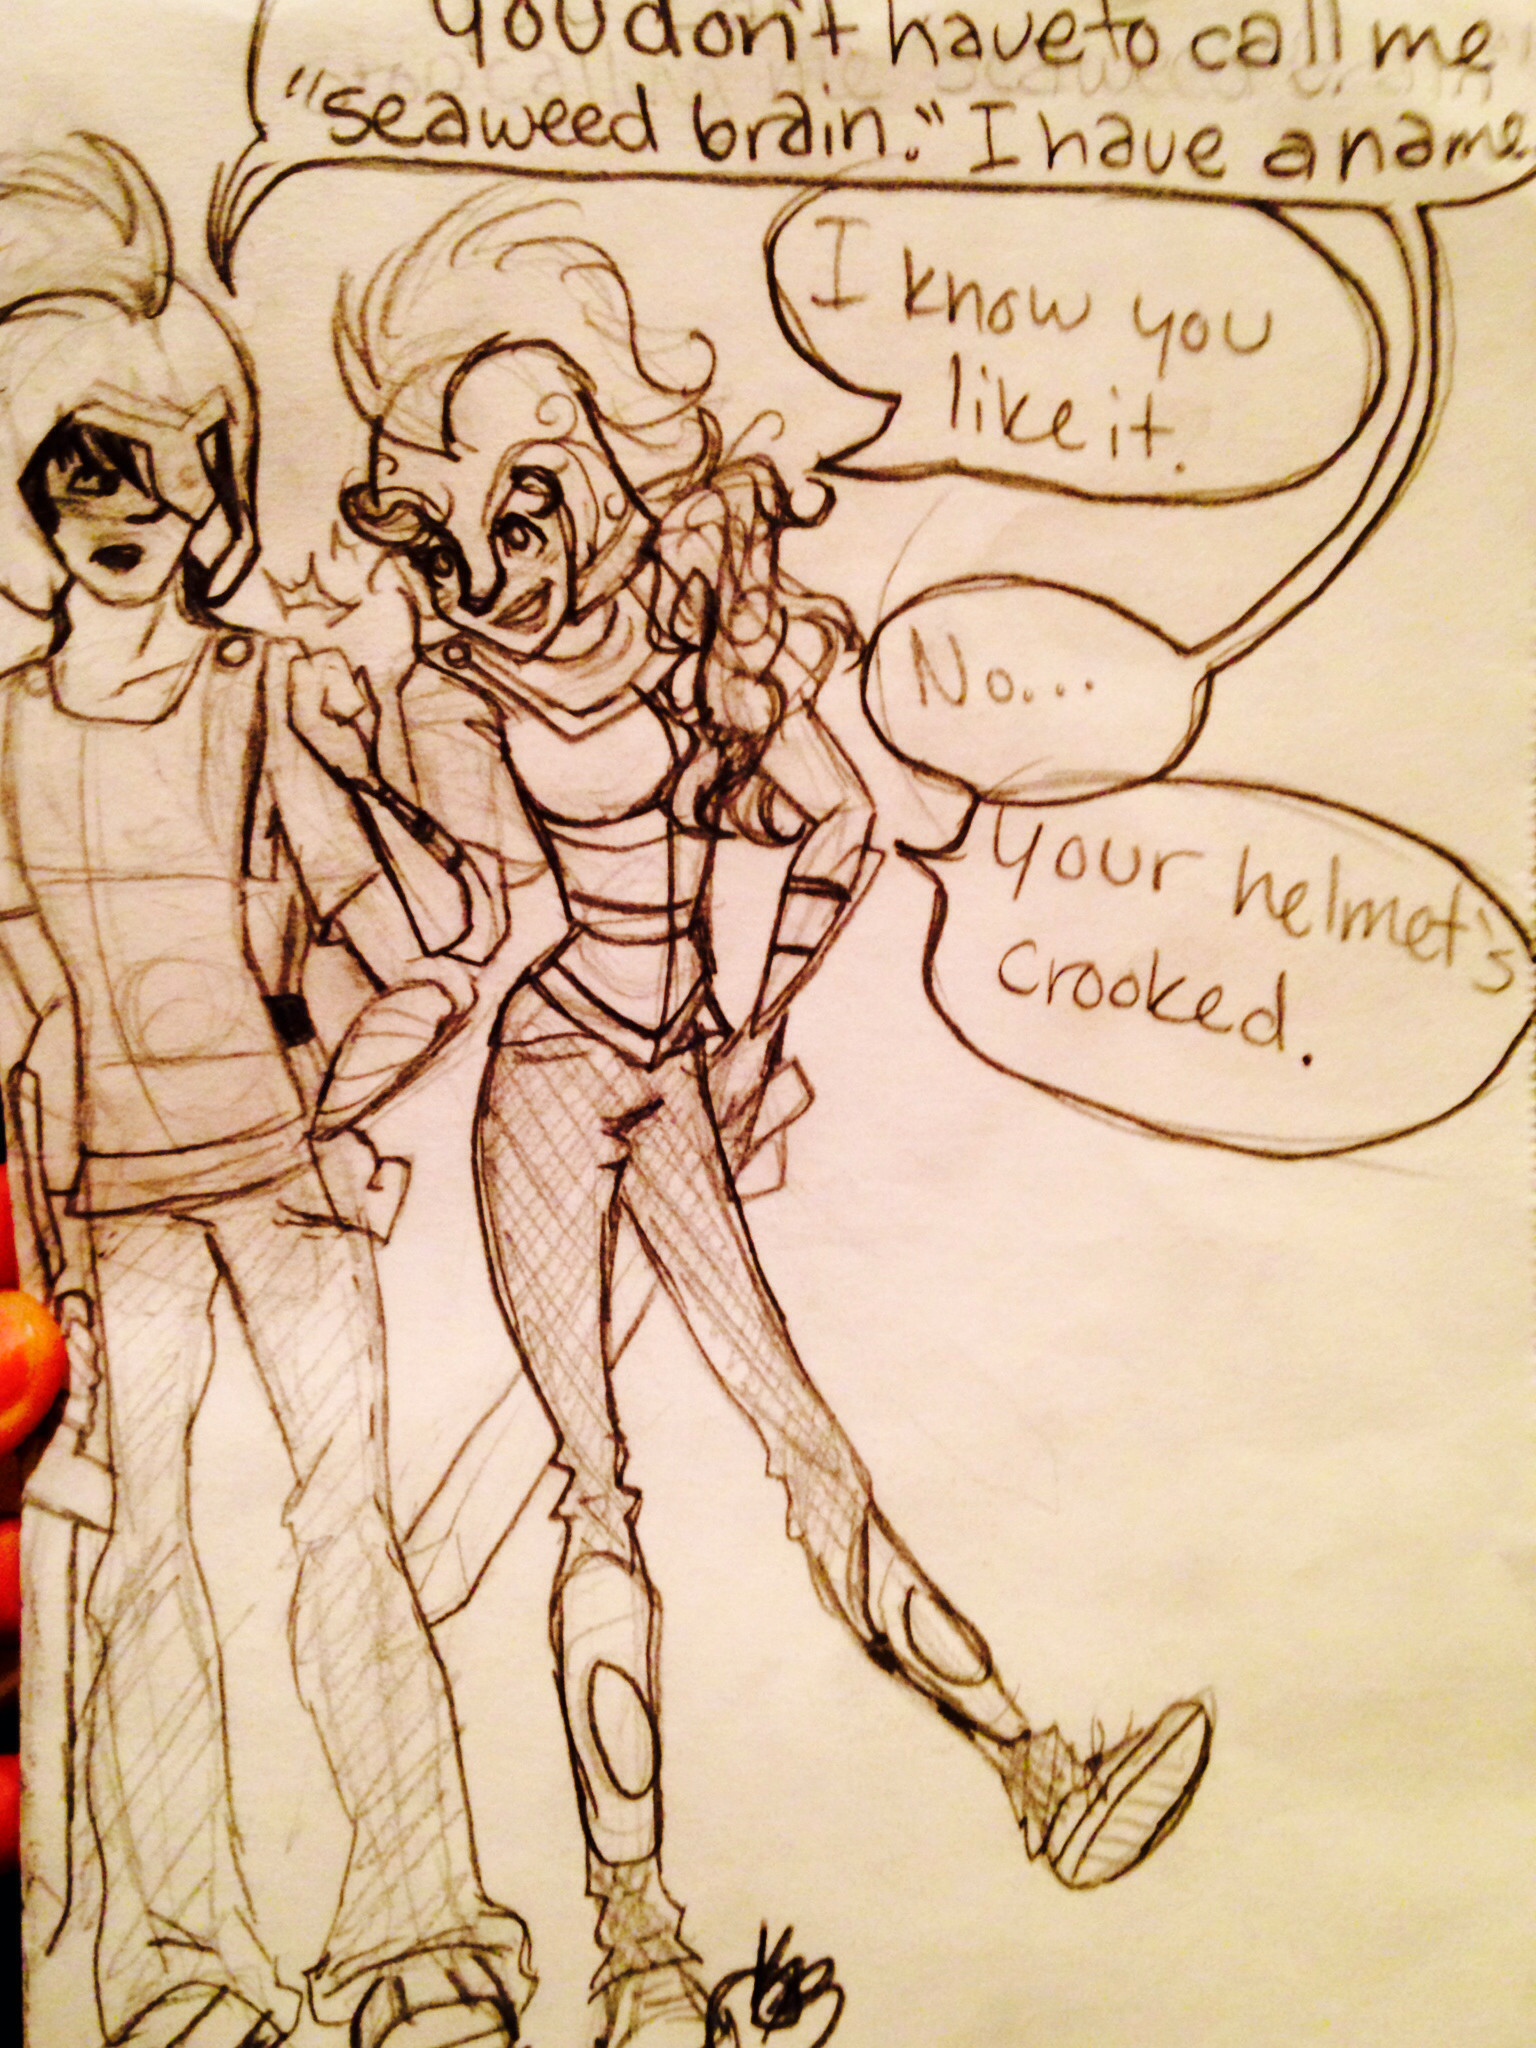 Percy Jackson and Annabeth Chase fan art by Kamryn Brockbank